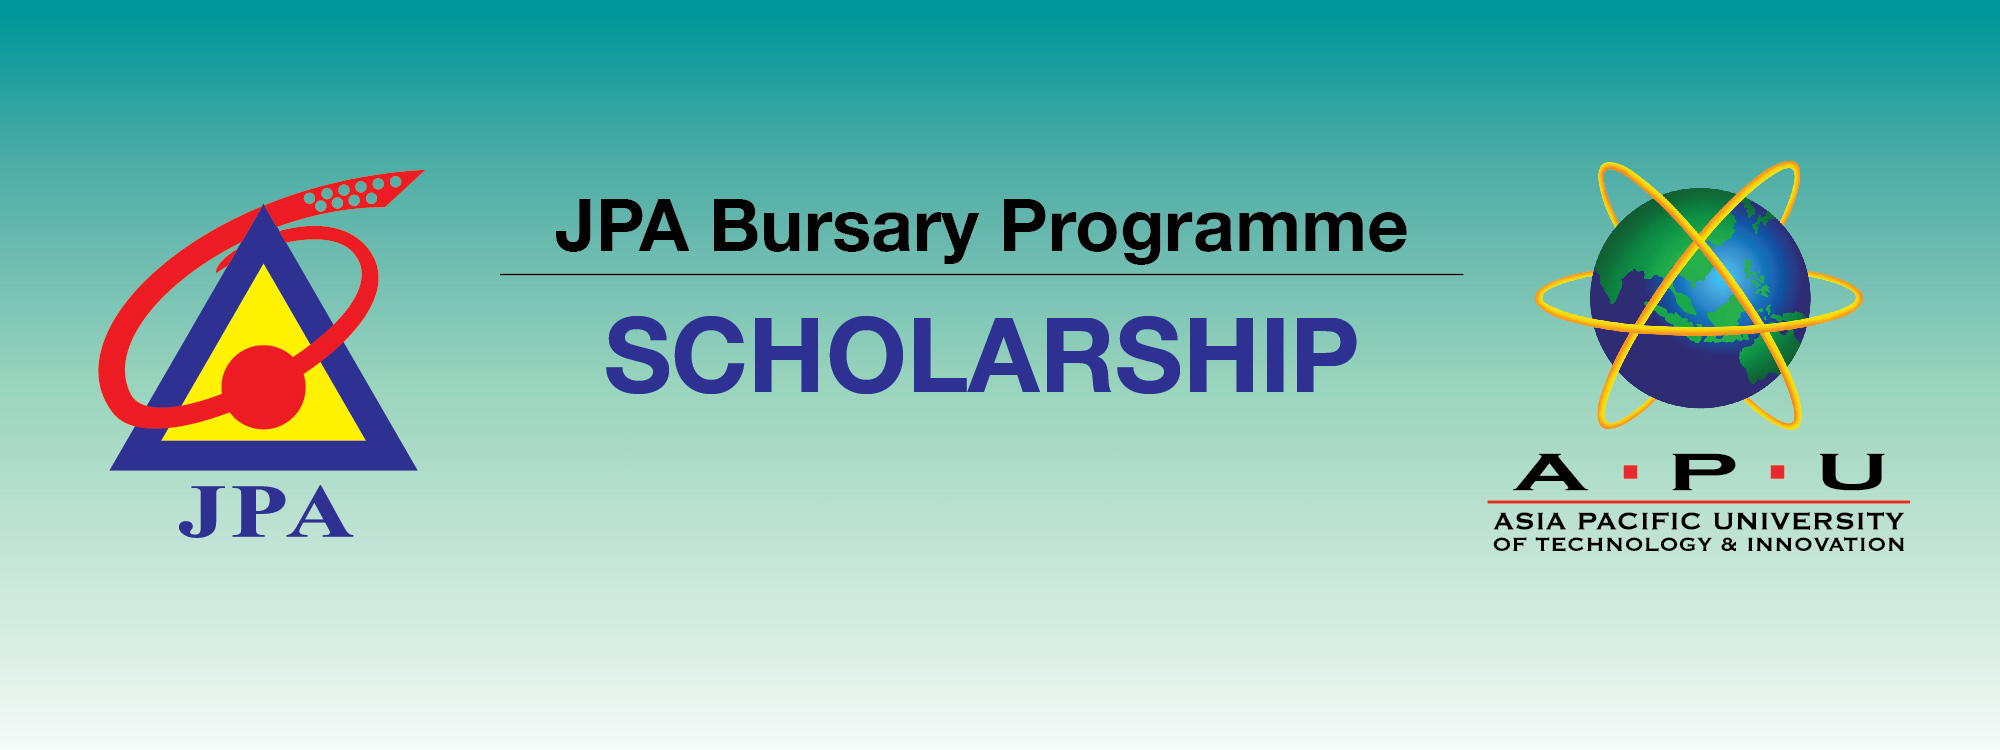 Jpa Bursary Programme 2020 Asia Pacific University Apu